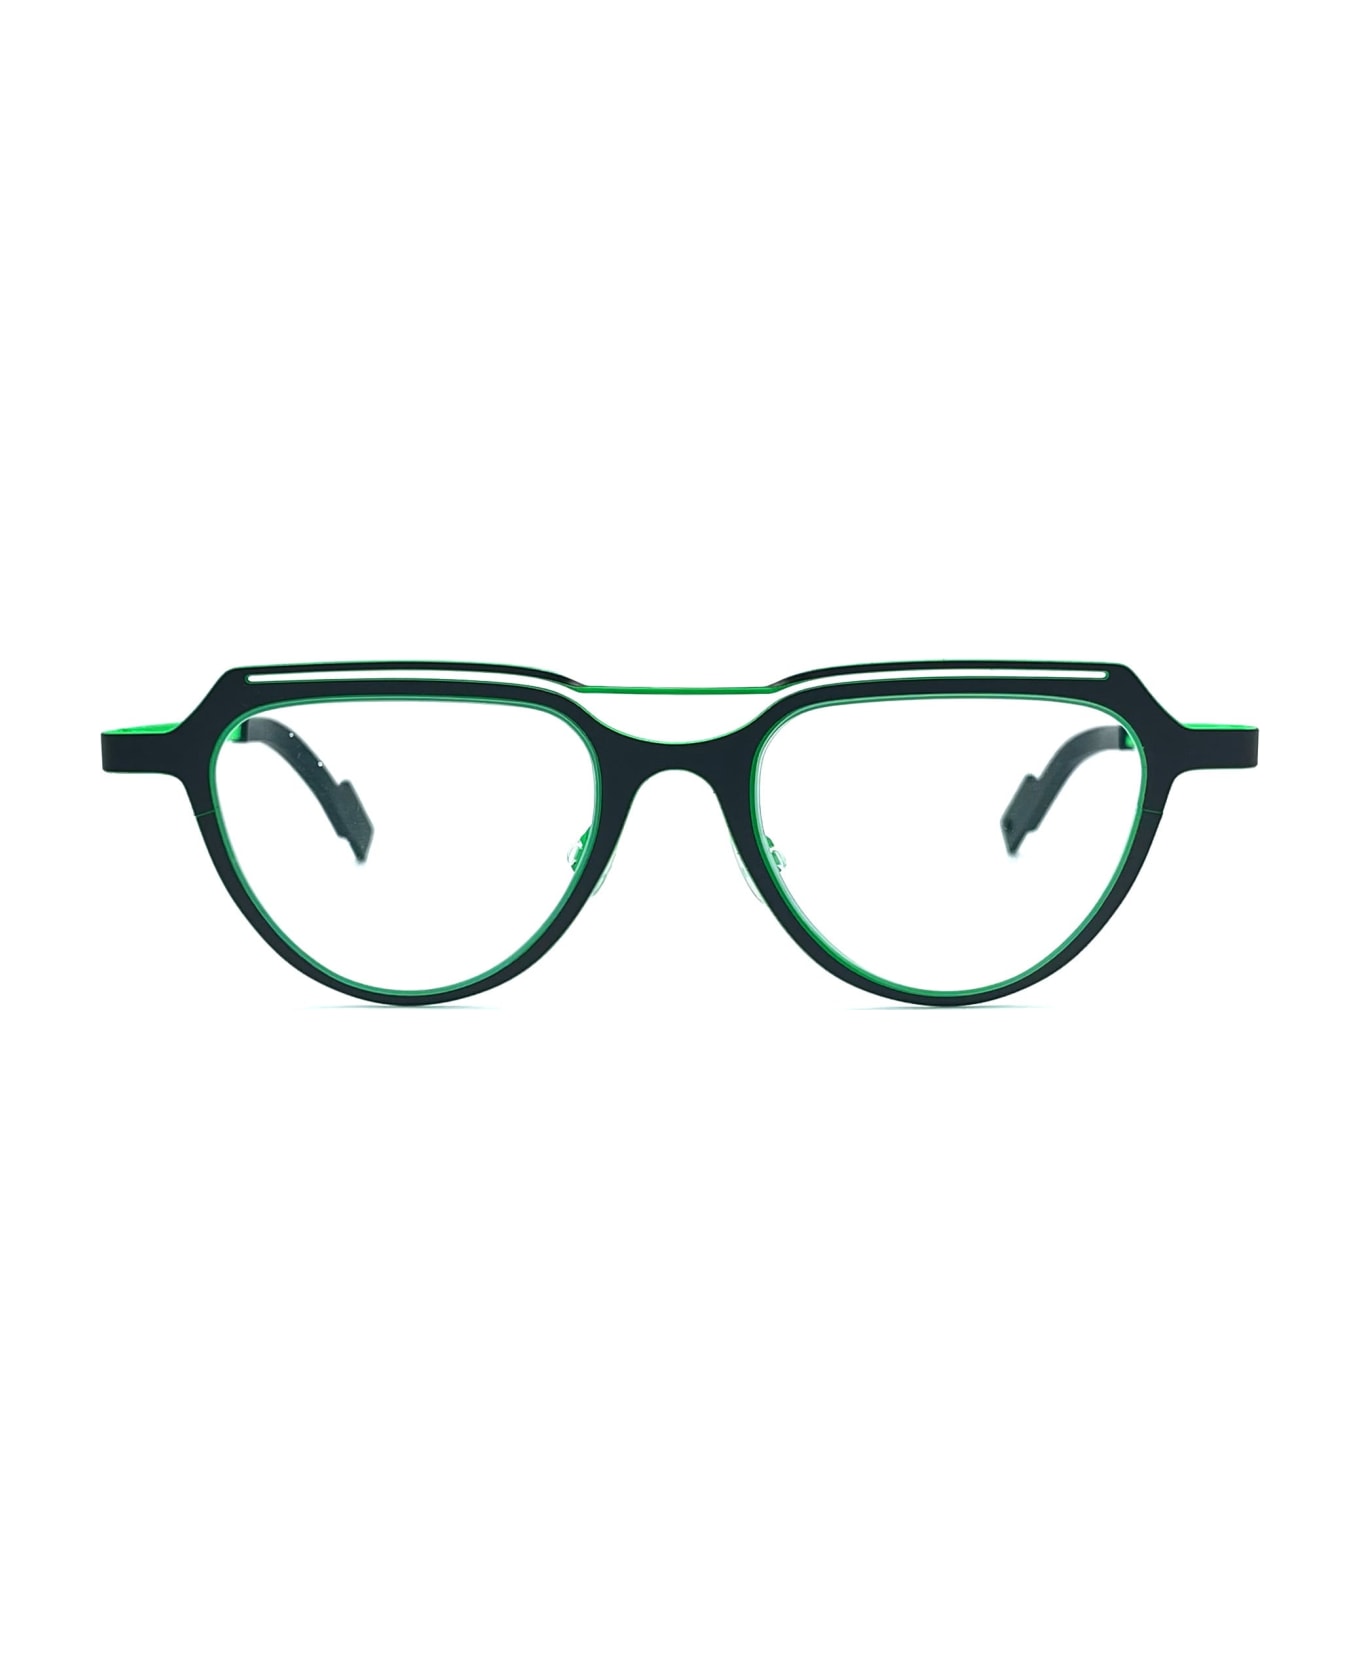 Theo Eyewear Dice - 373 Glasses - green